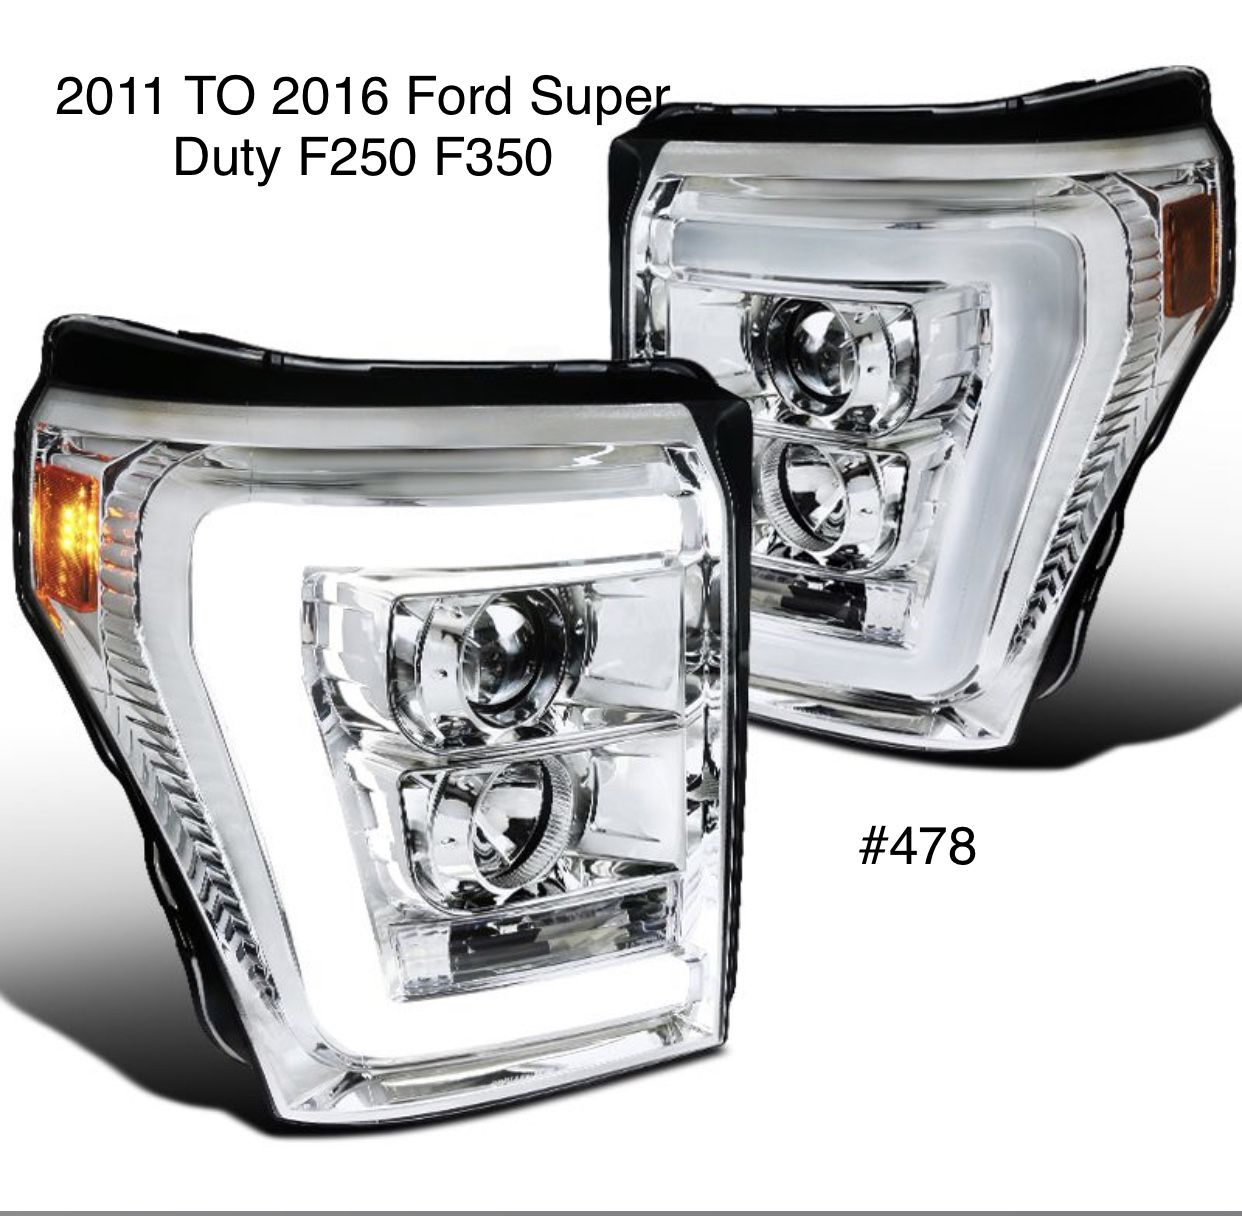 2011 TO 2016 Ford Super Duty F250 F350 F450 F550 LED DRL Tube Projector Headlights - Chrome